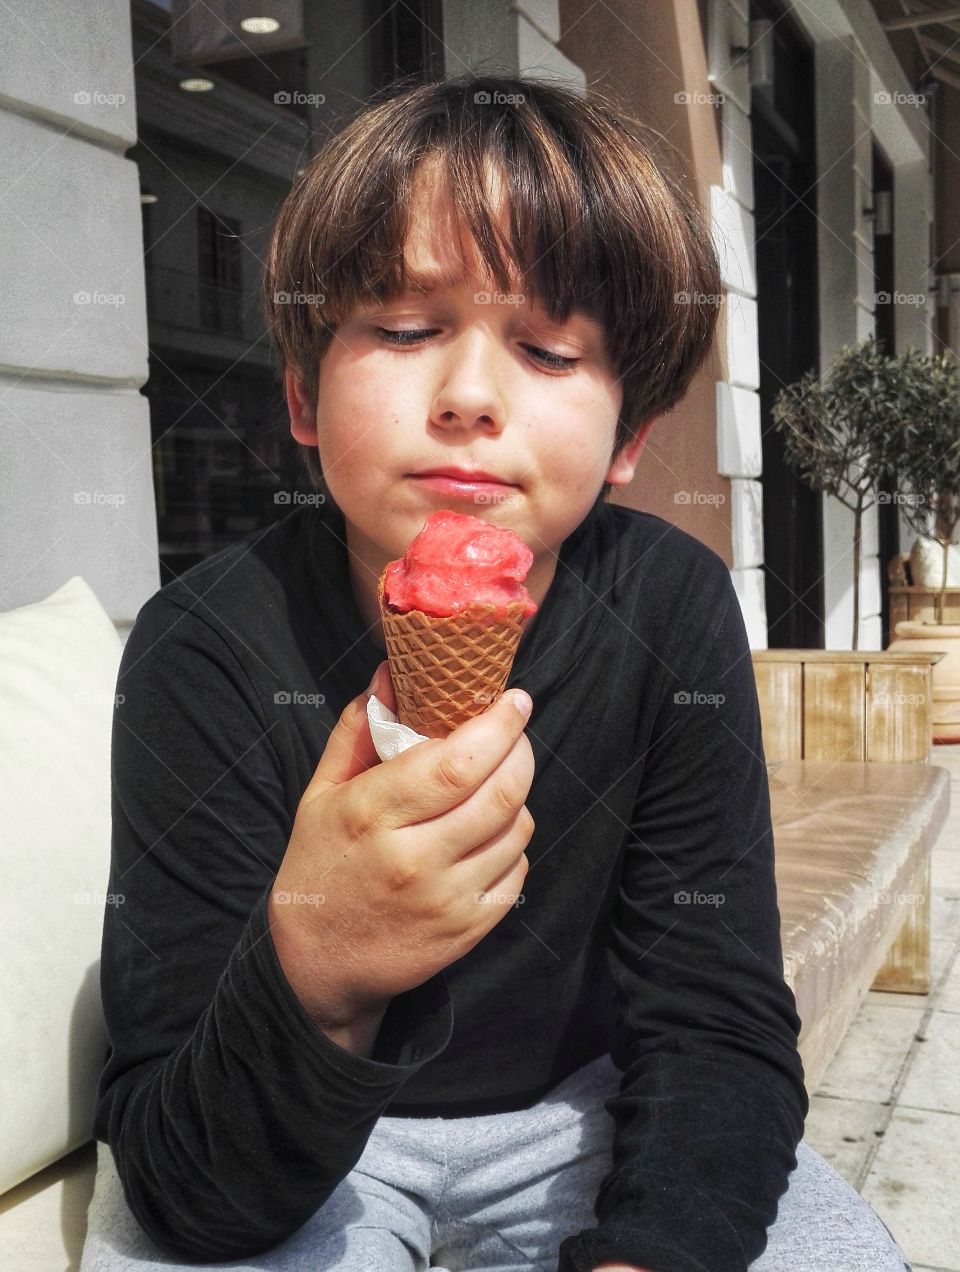 my favourite snack is strawberry ice cream